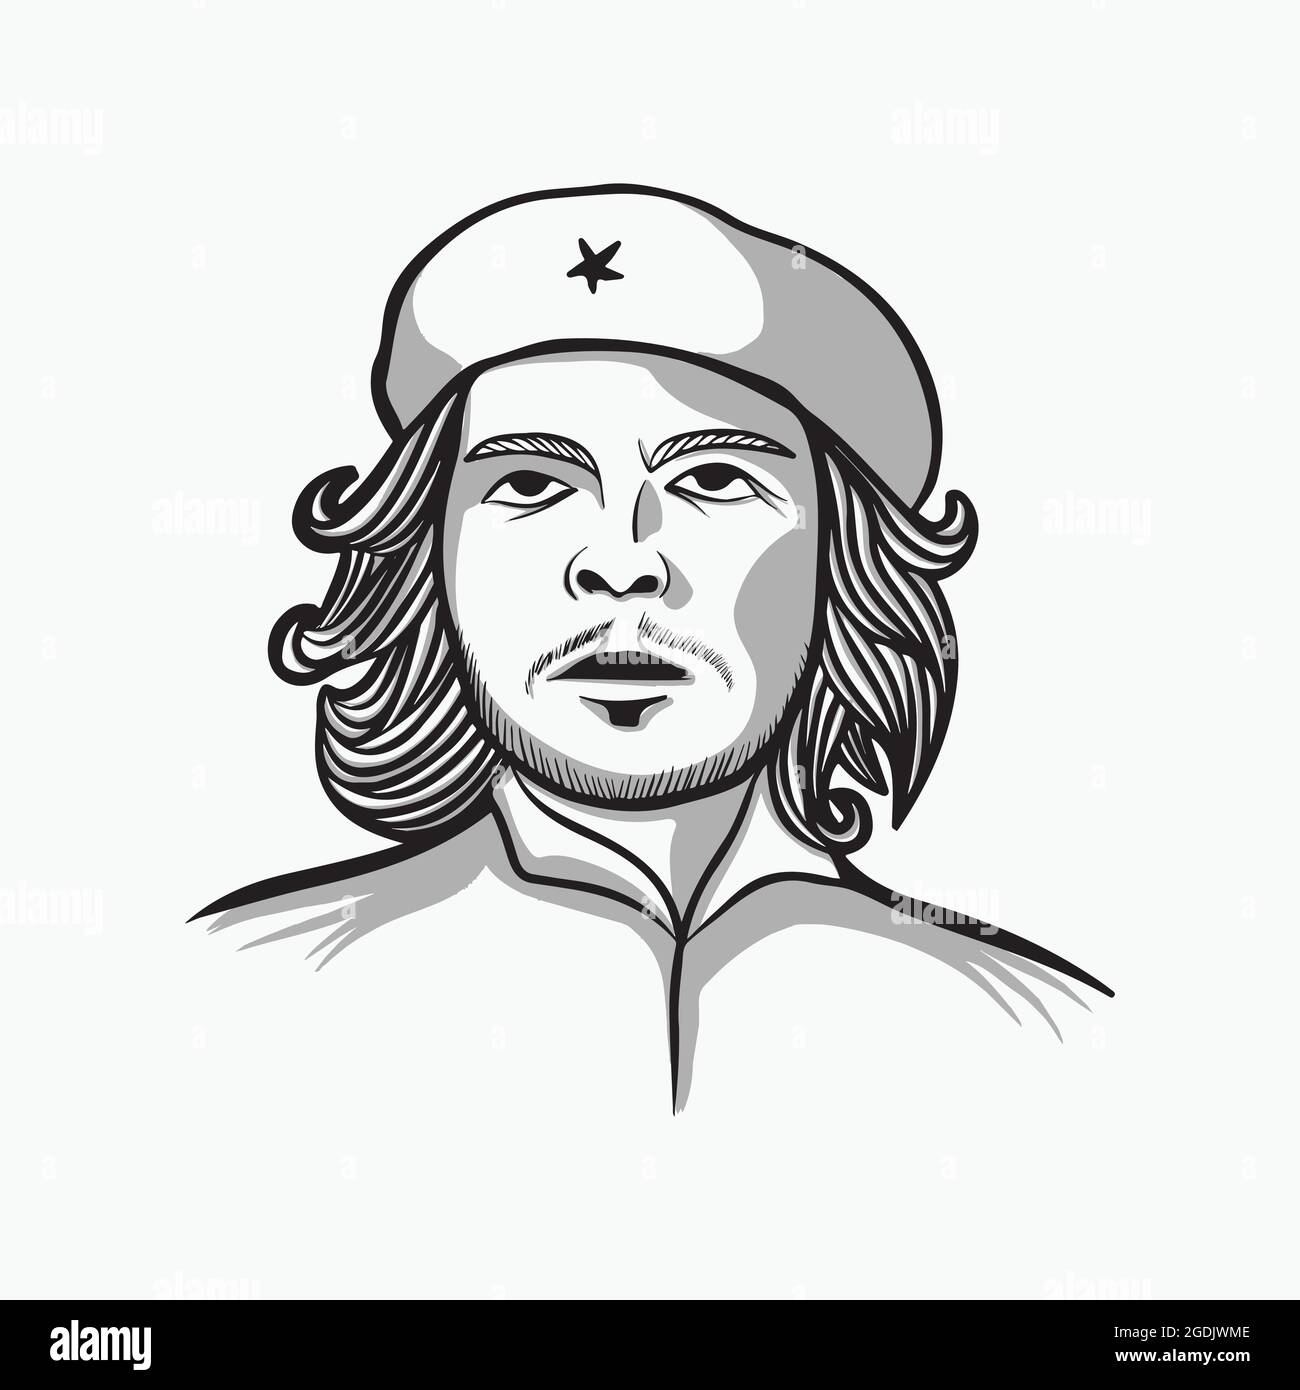 Ernesto Che Guevara image vectorielle, monoline Ernesto Che Guevara avec simple ombre, conception isolée Illustration de Vecteur